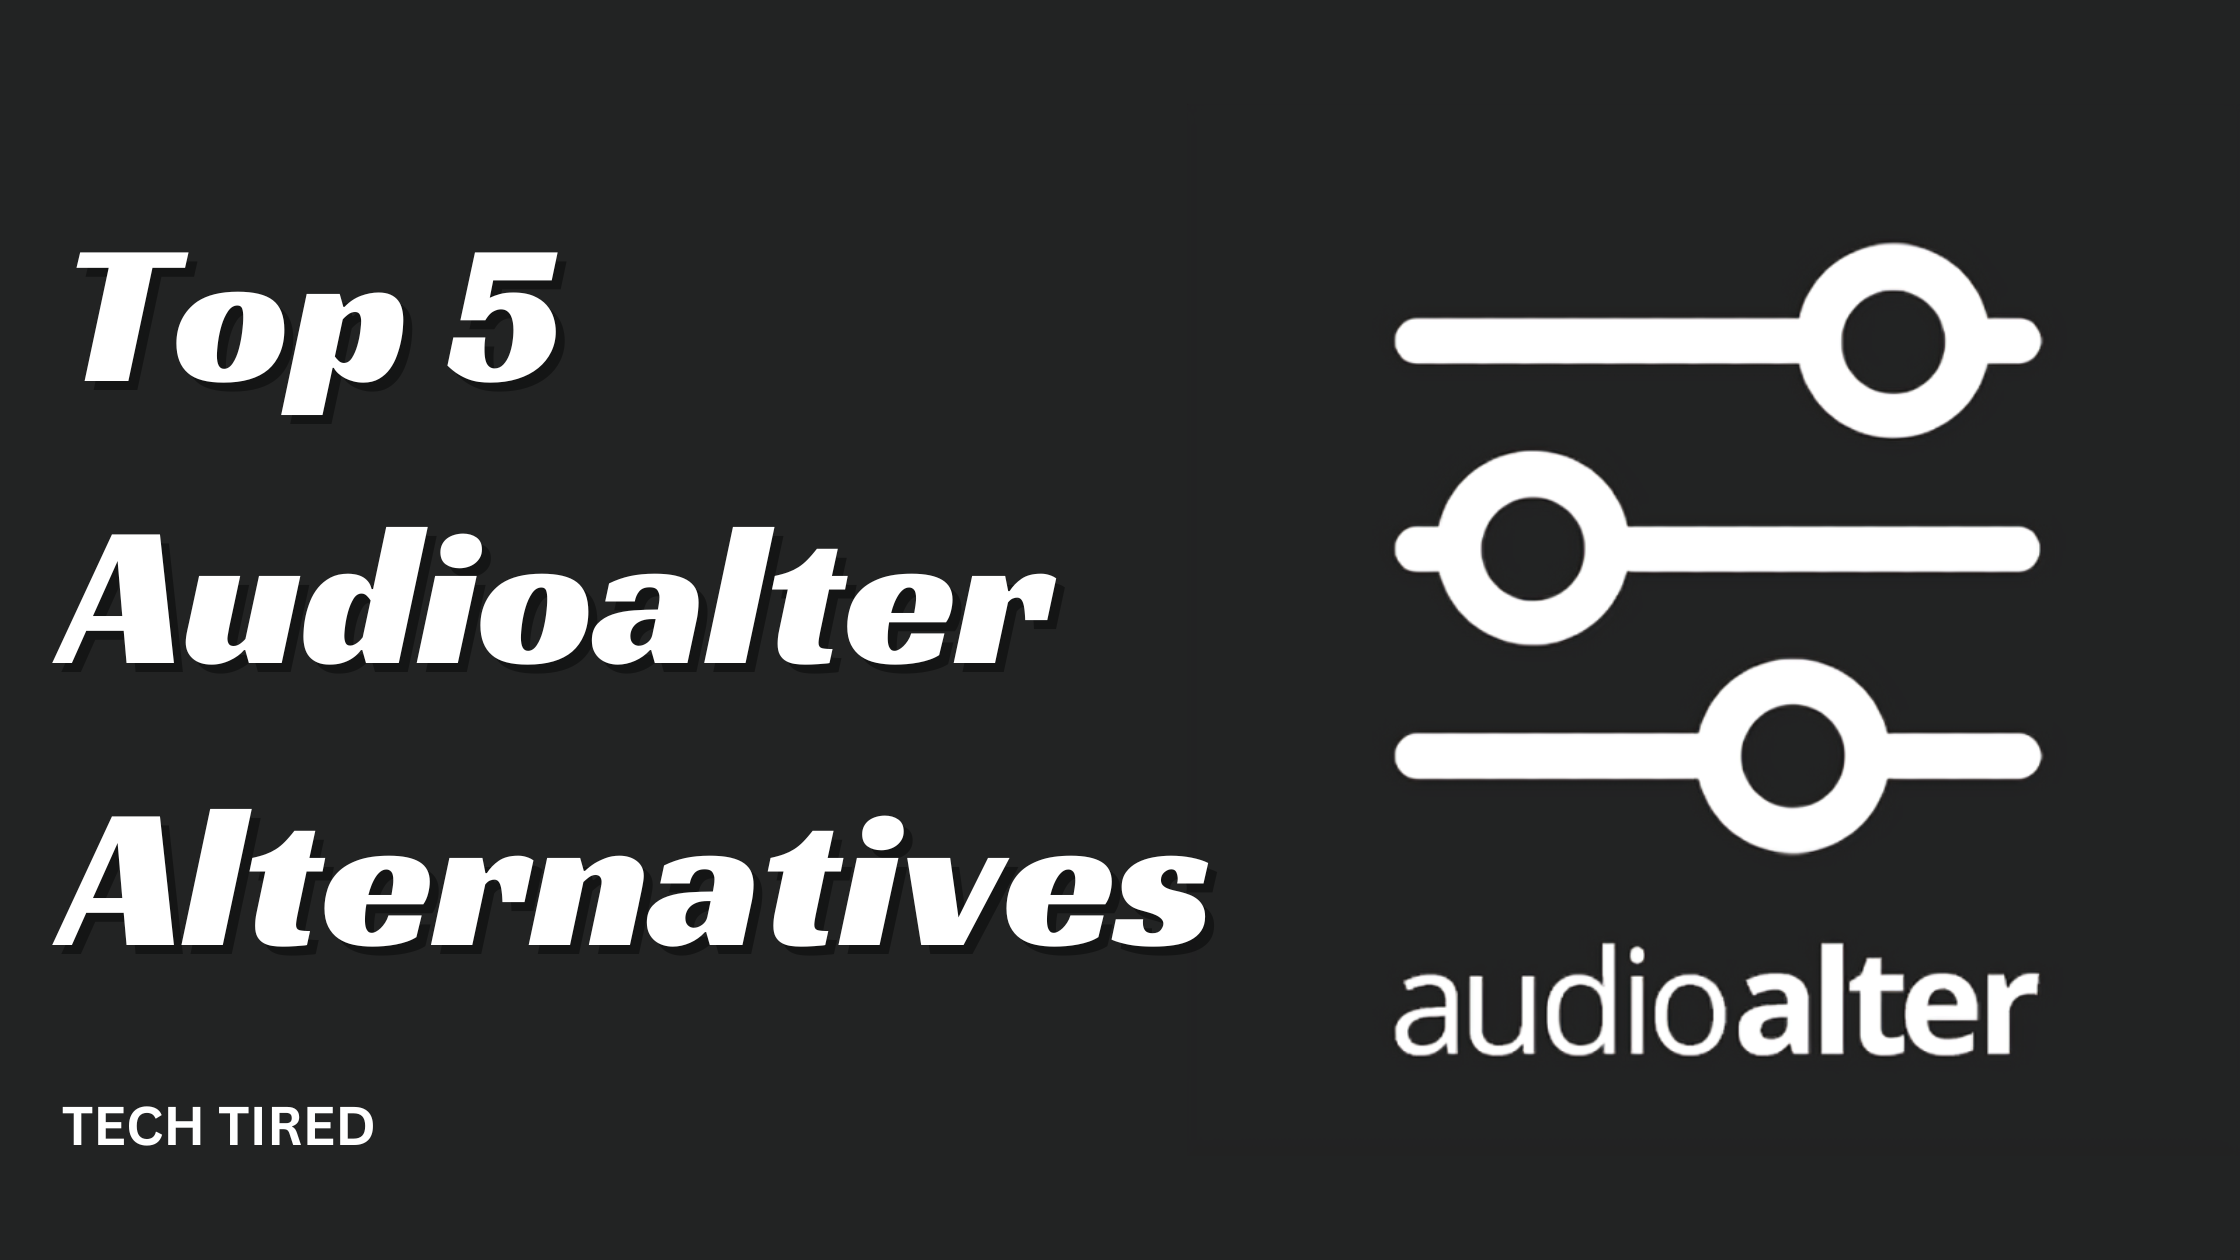 Top 5 Audioalter Alternatives